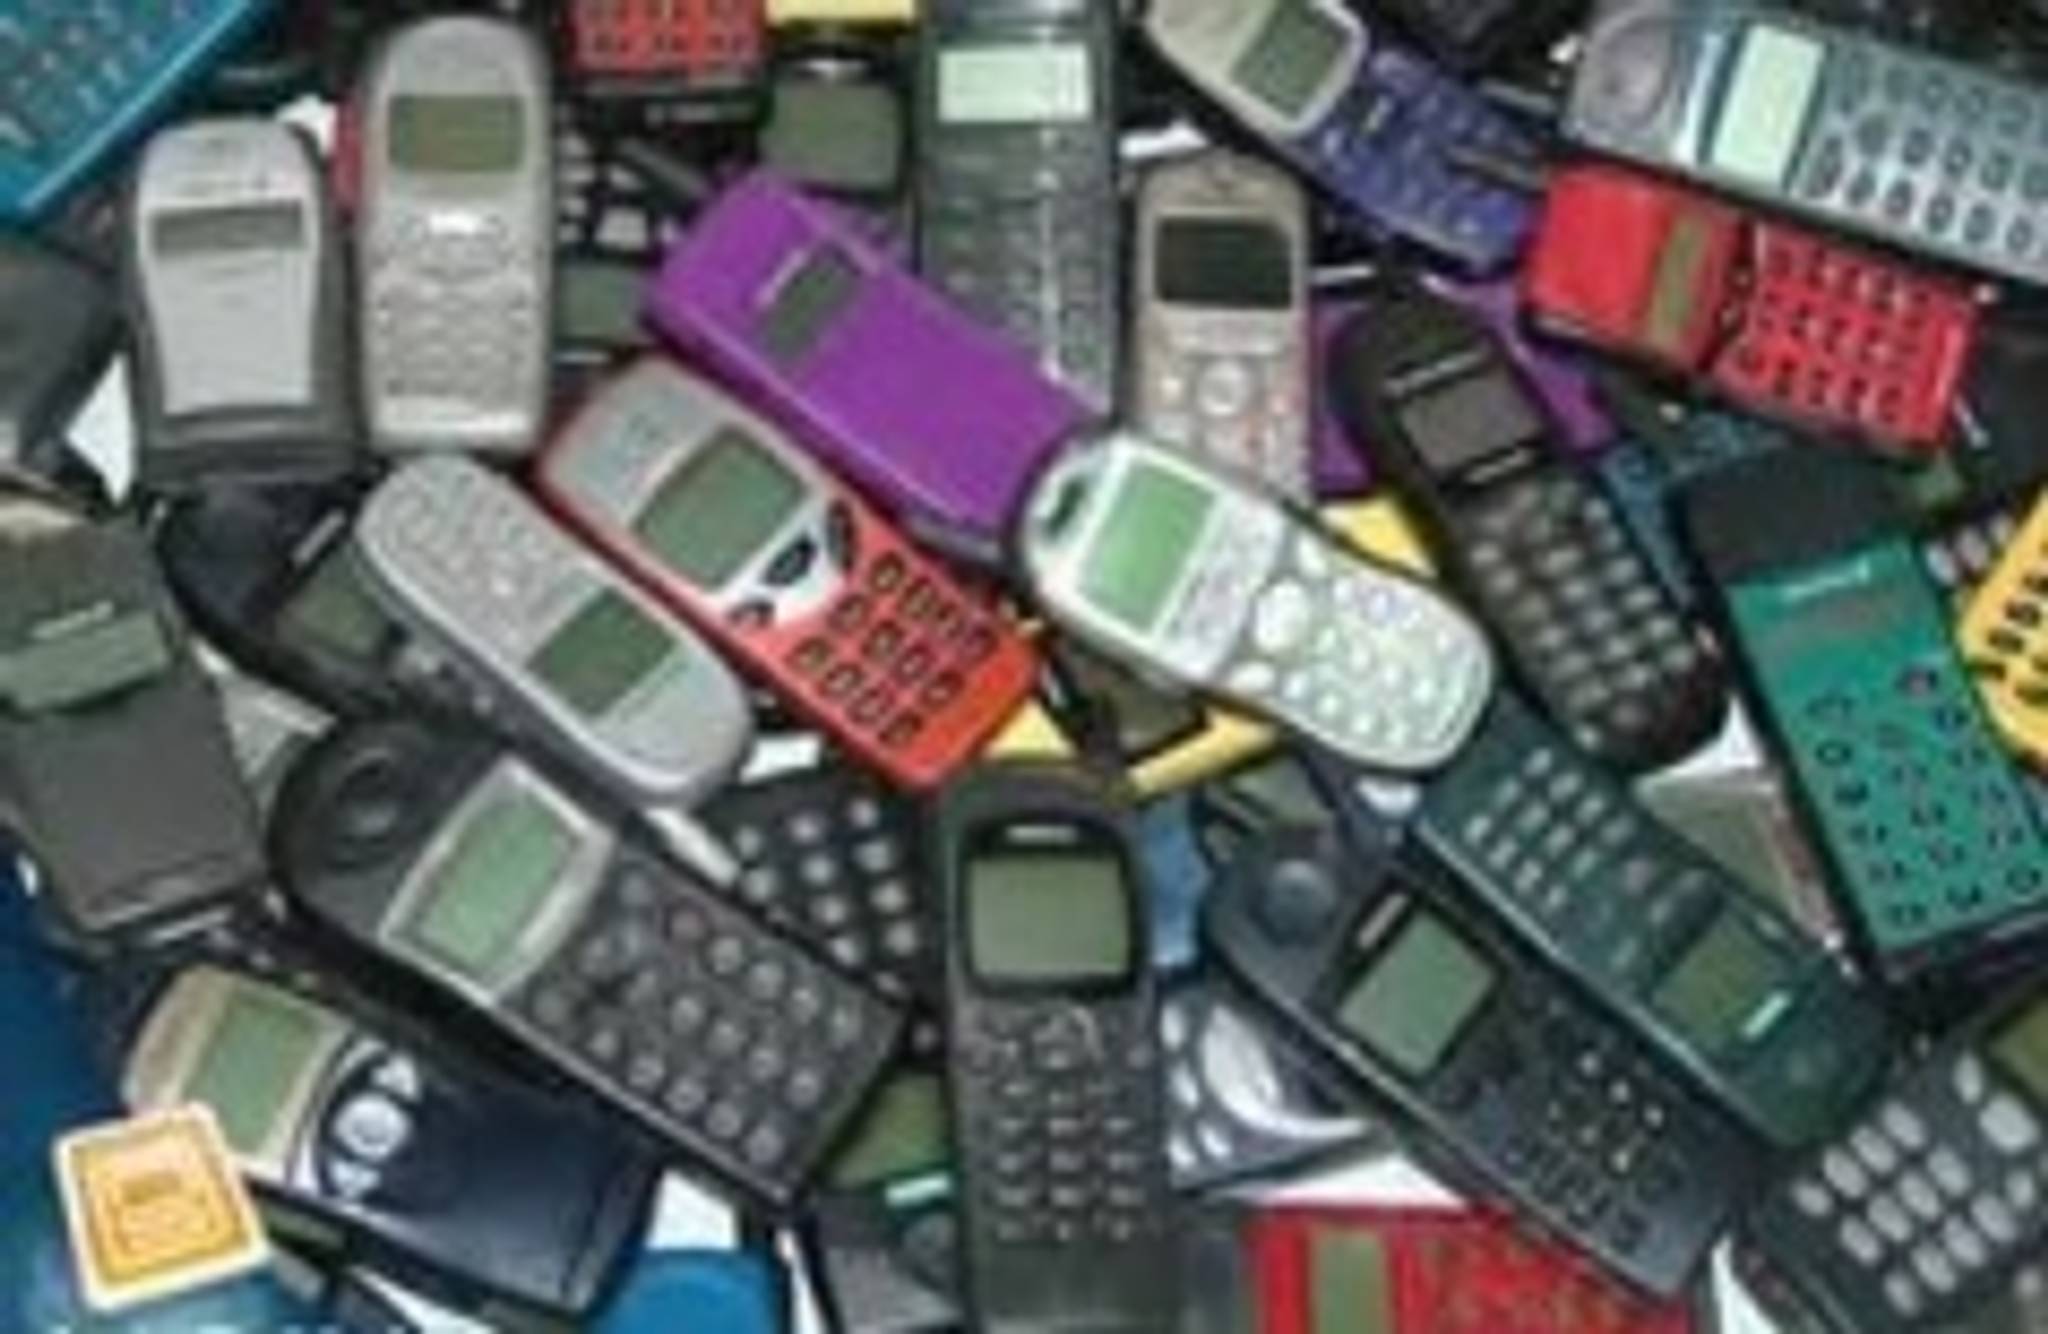 Emerging economies prefer old phones